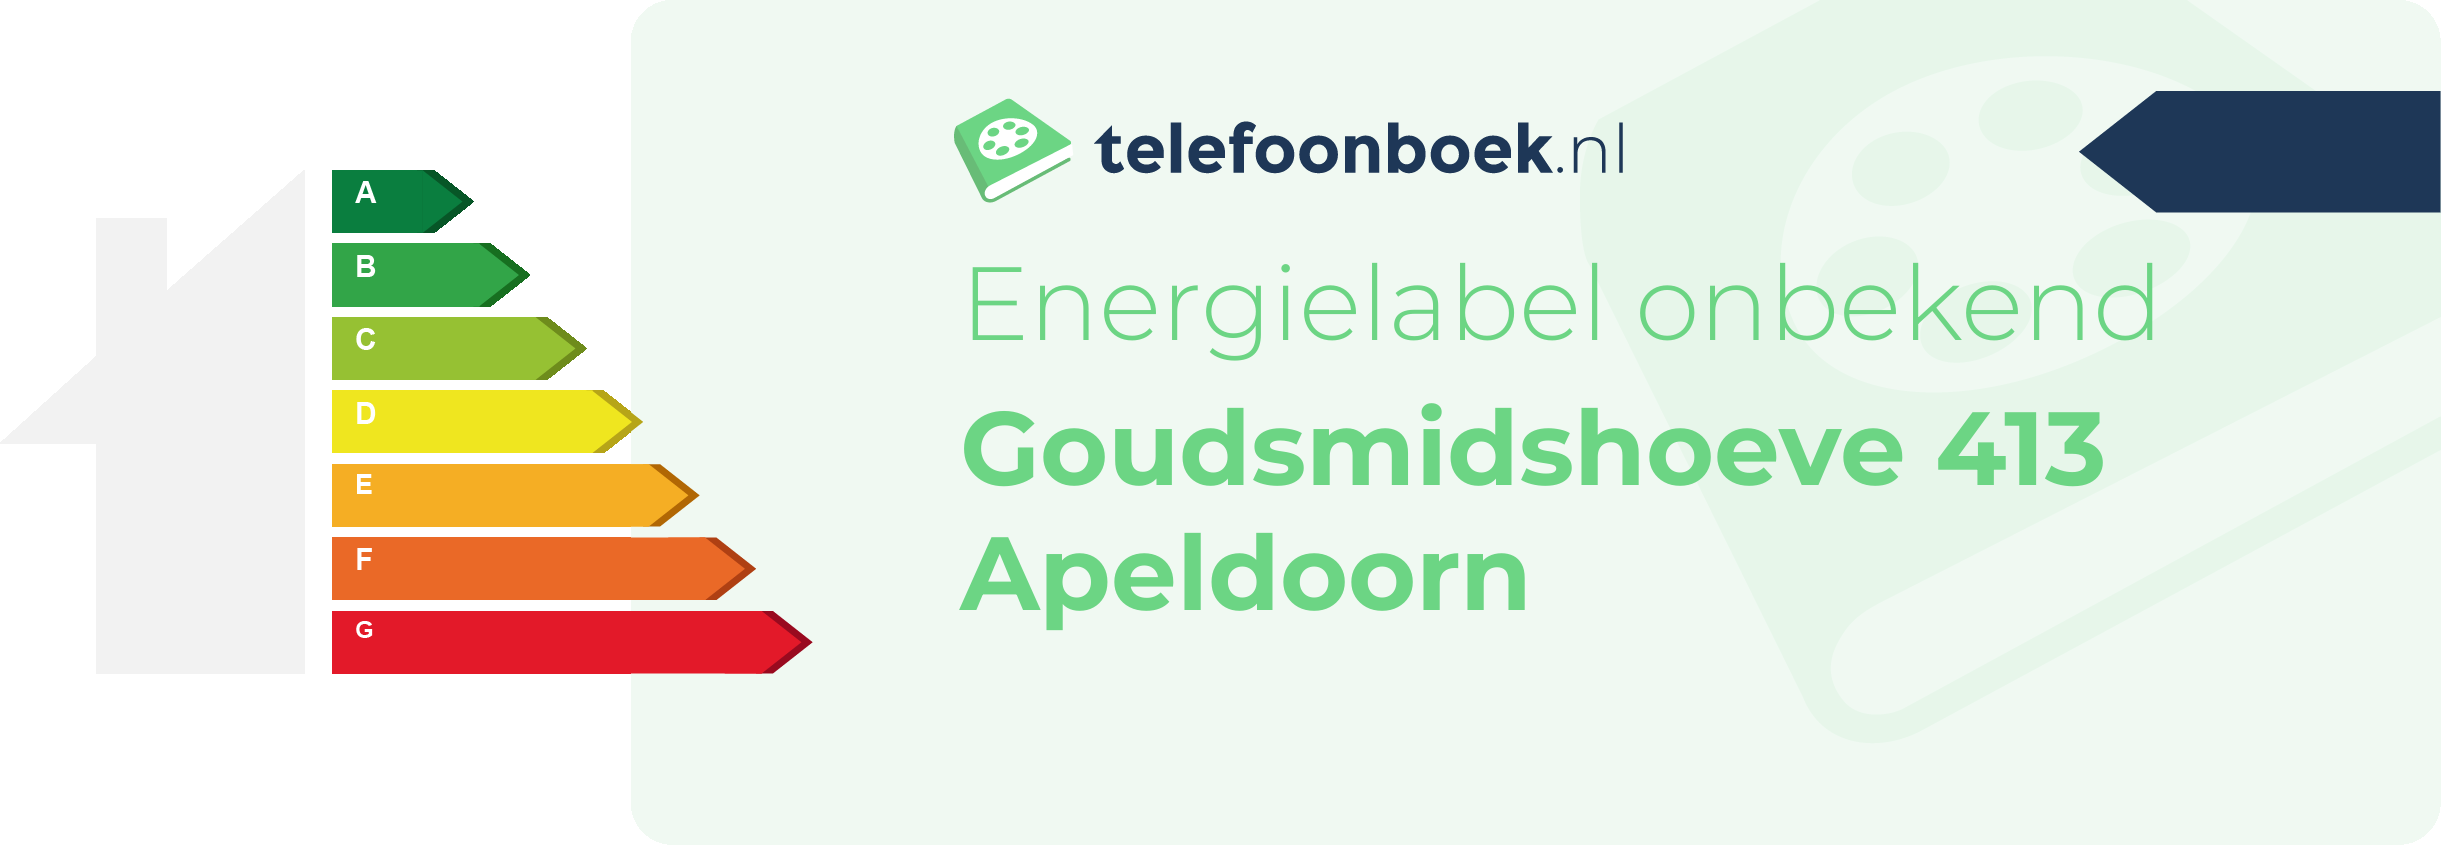 Energielabel Goudsmidshoeve 413 Apeldoorn